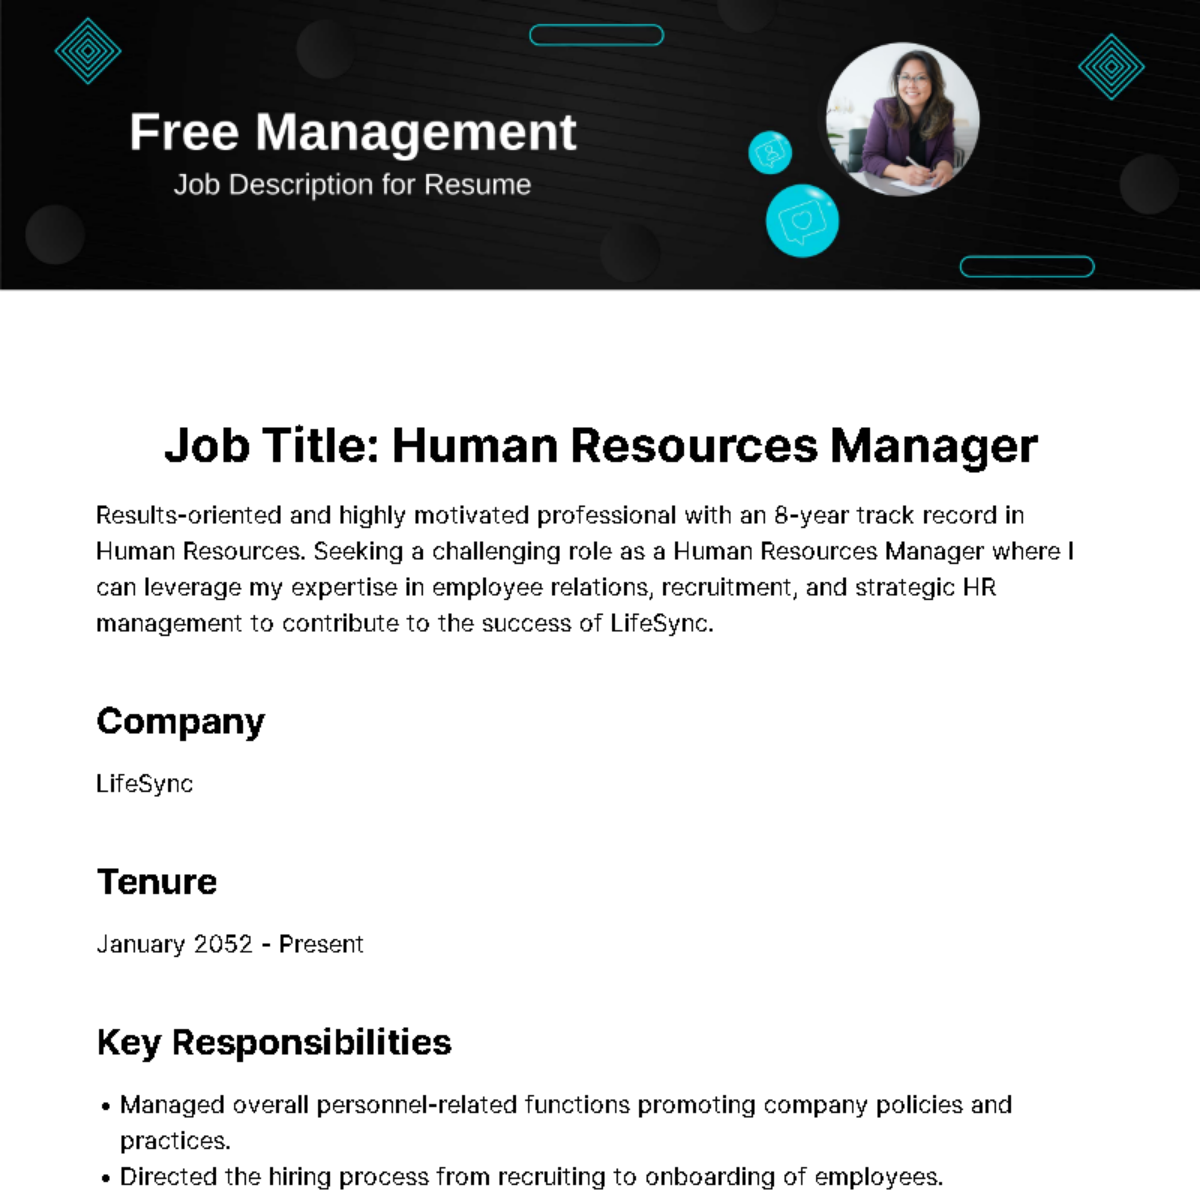 Free Management Job Description for Resume Template